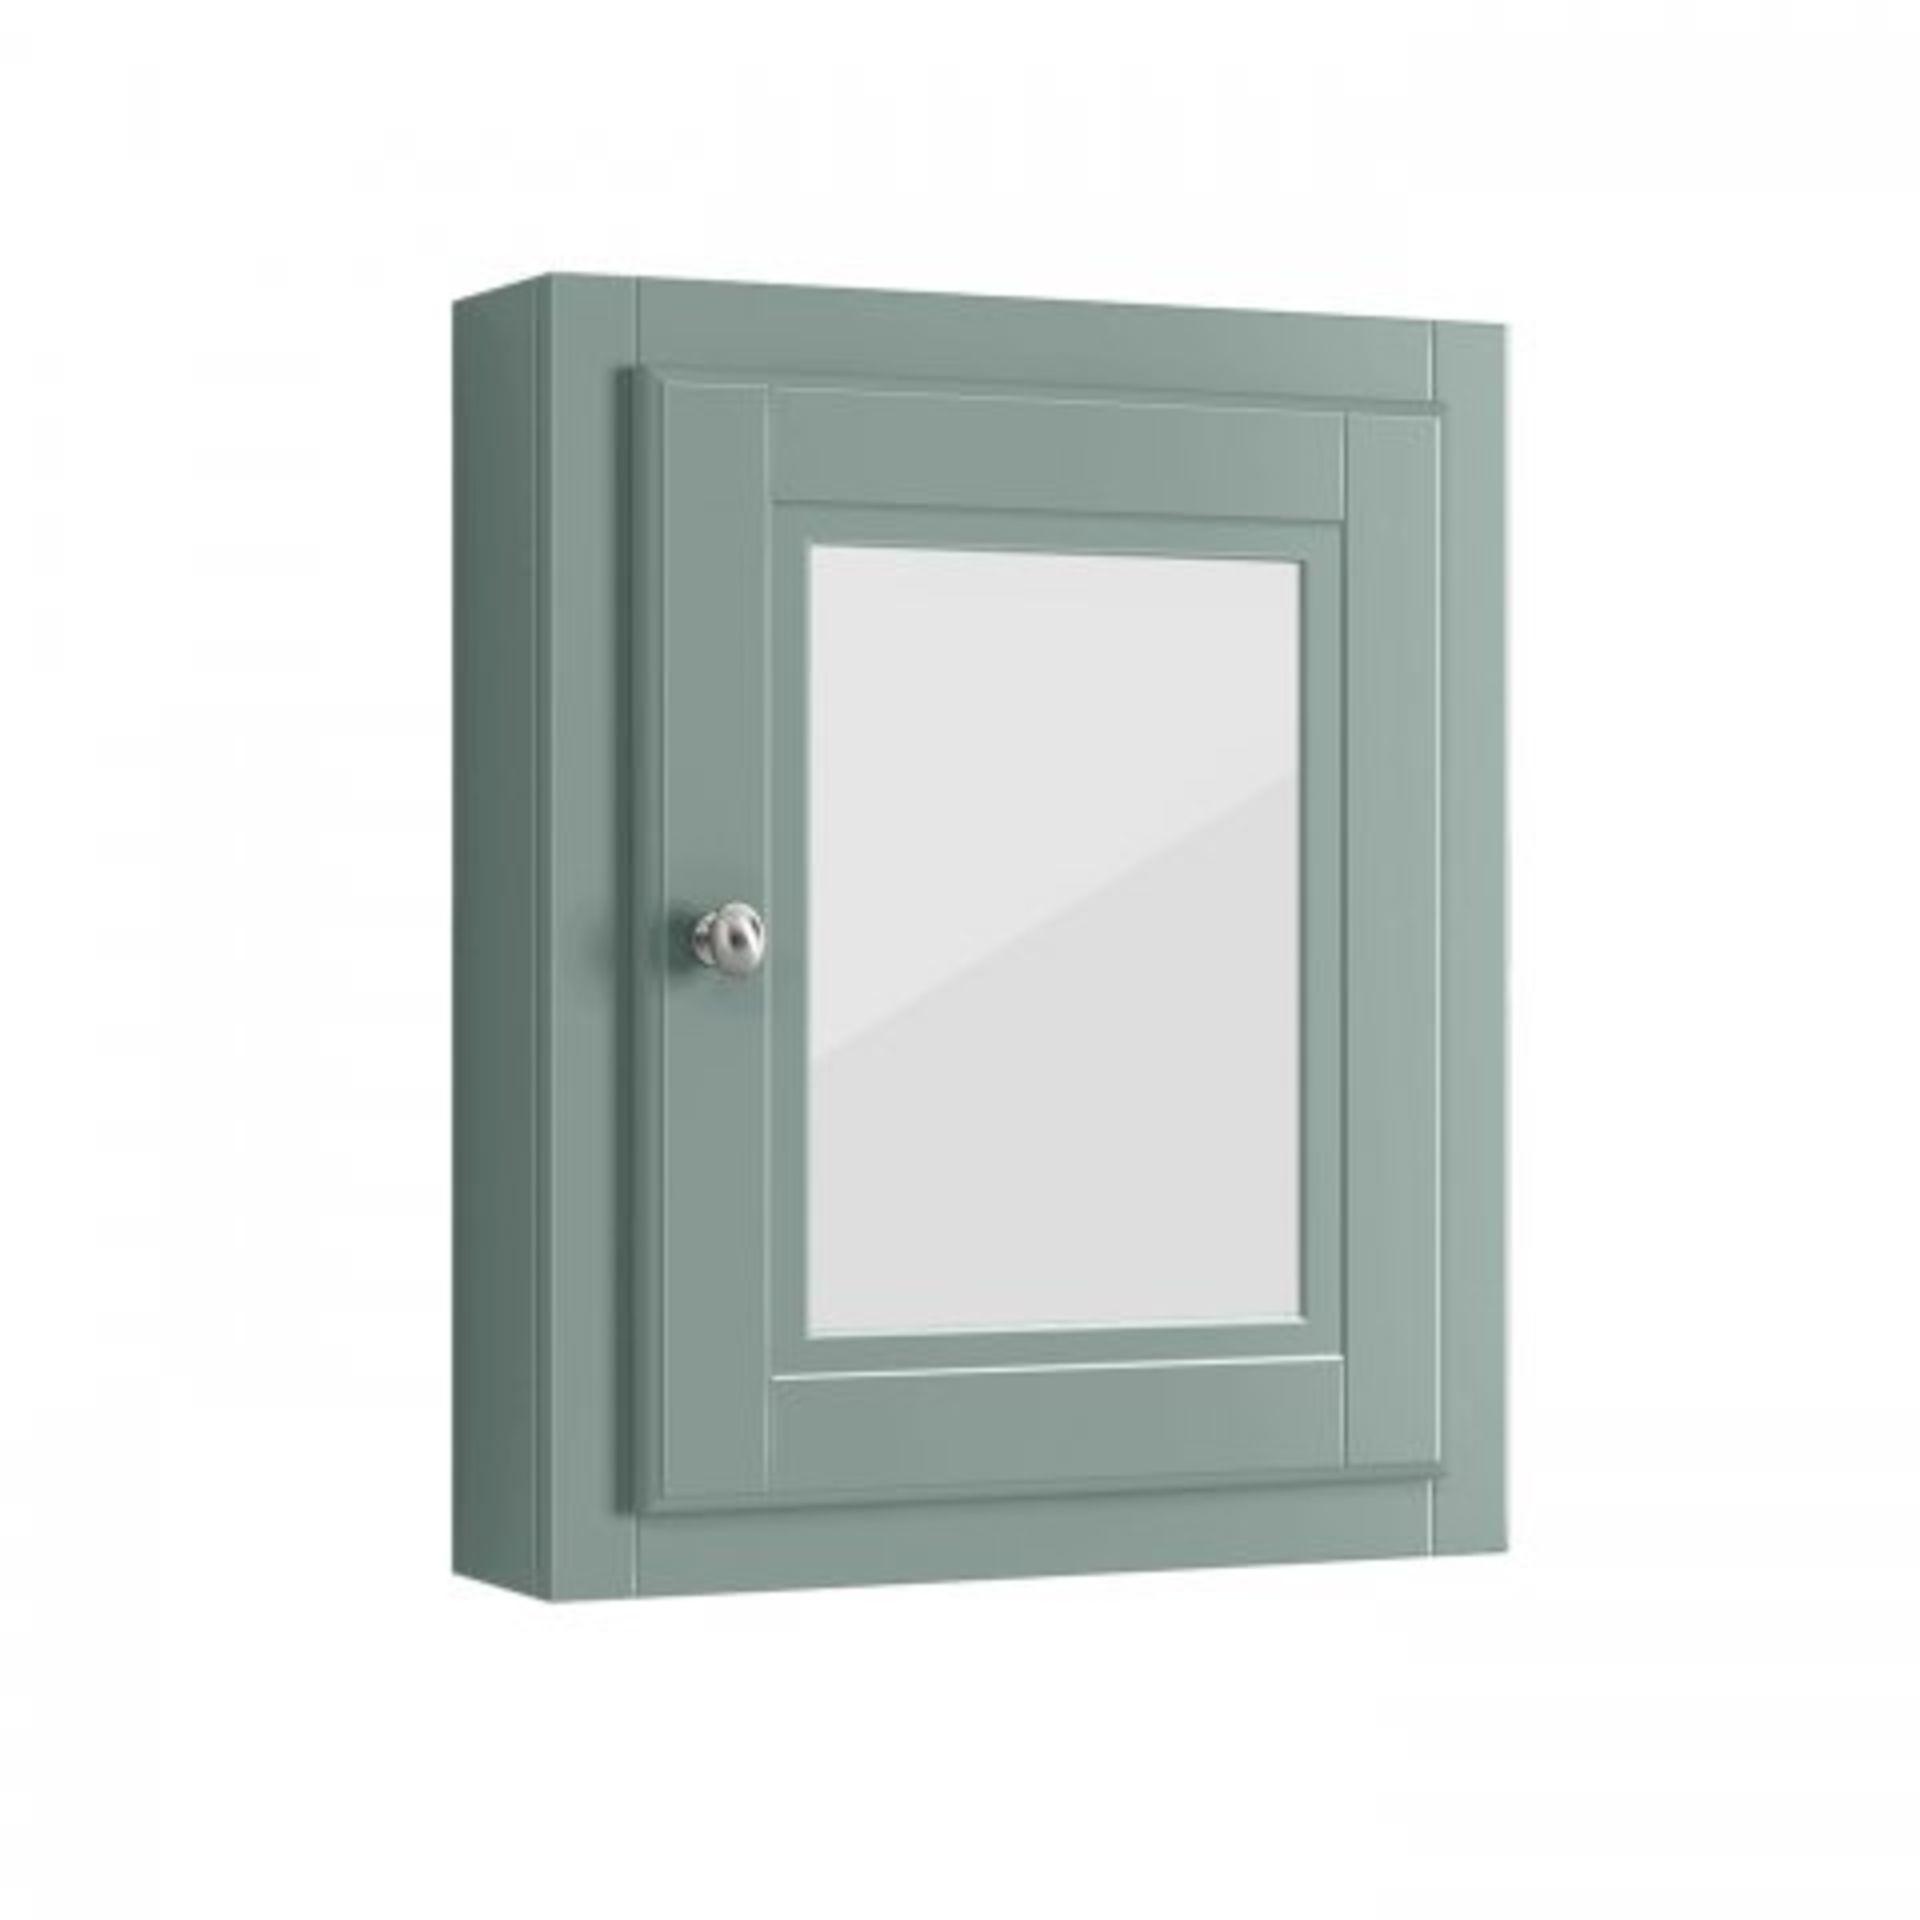 (V51) Cambridge Single Door Mirror Cabinet - Marine Mist RRP £224.99 Our Interior Designer says... - Image 4 of 4